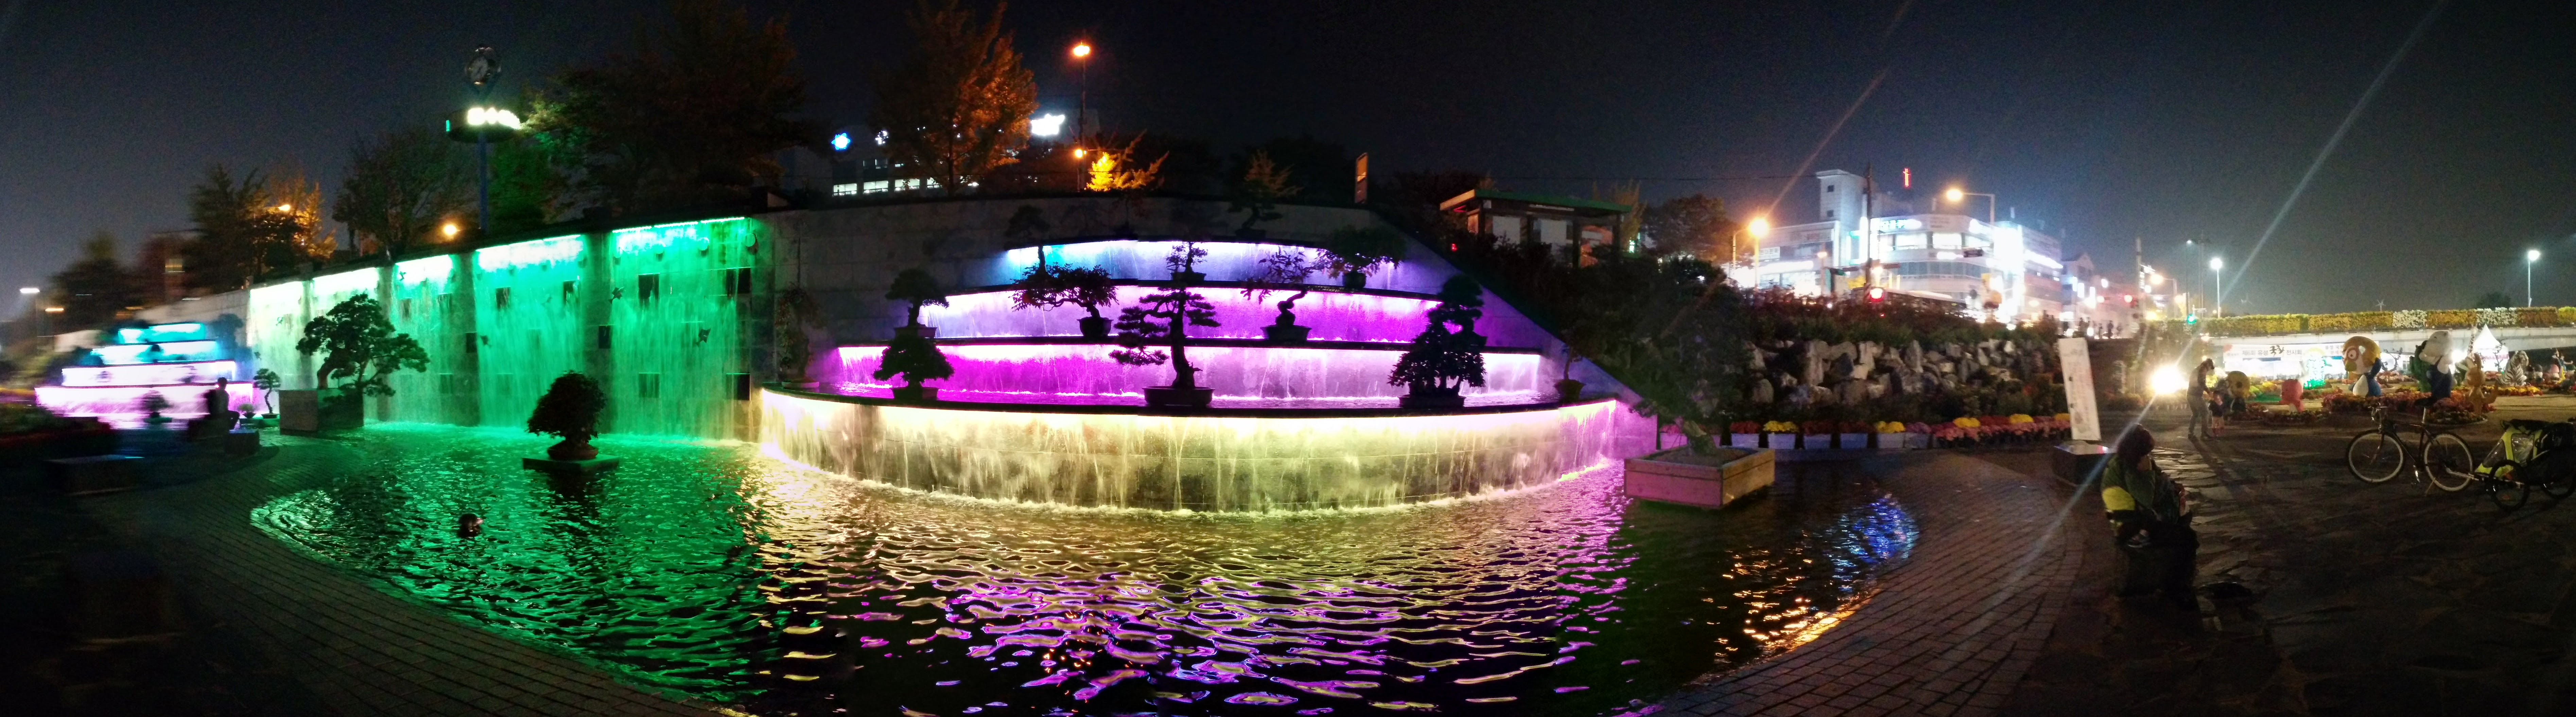 PANO_20151020_192056.jpg 축제중인 불빛 분수대 파노라마 사진